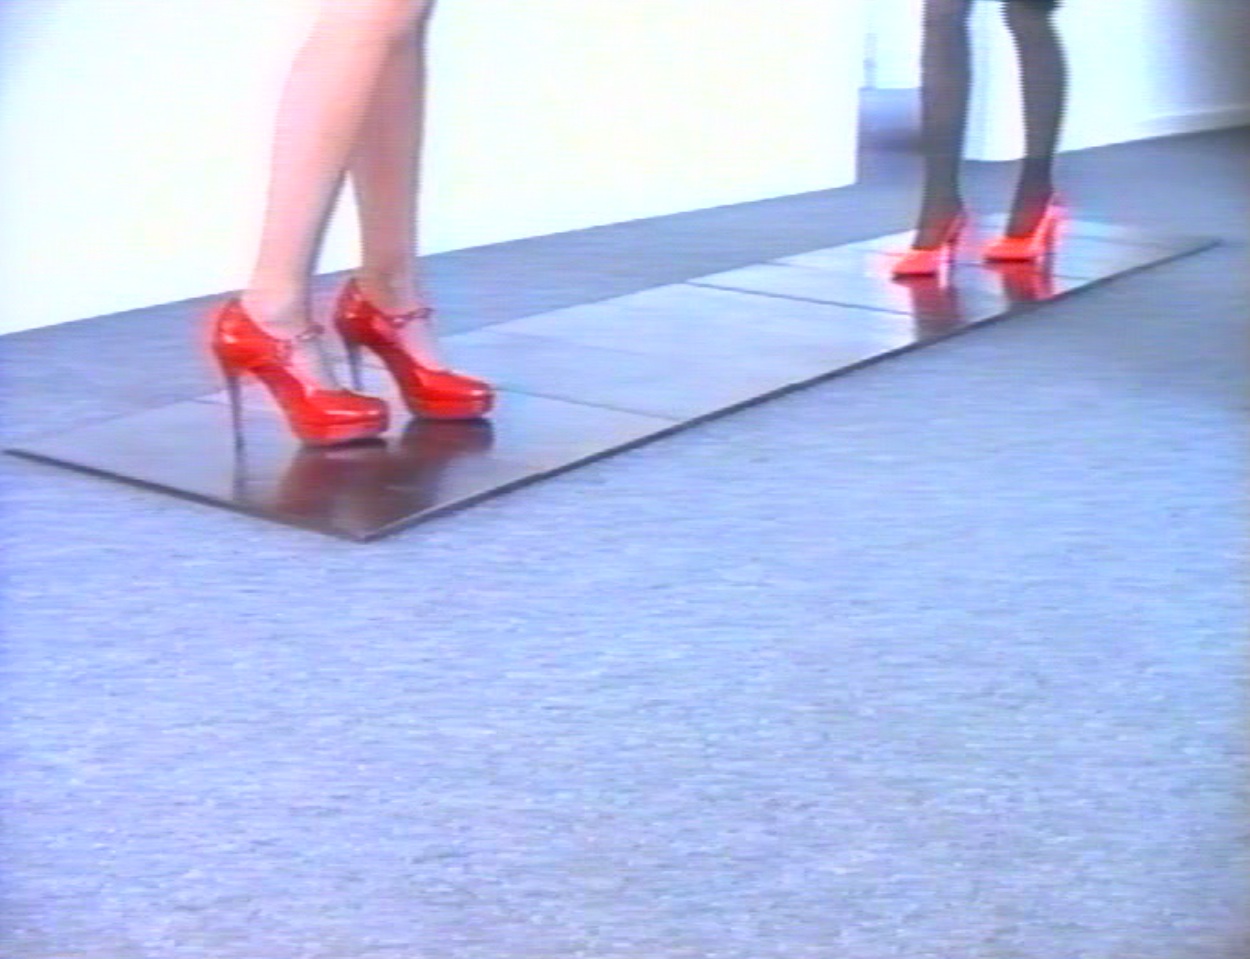 Landmarks Video Presents "Walking on Carl Andre" by Sylvie Fleury